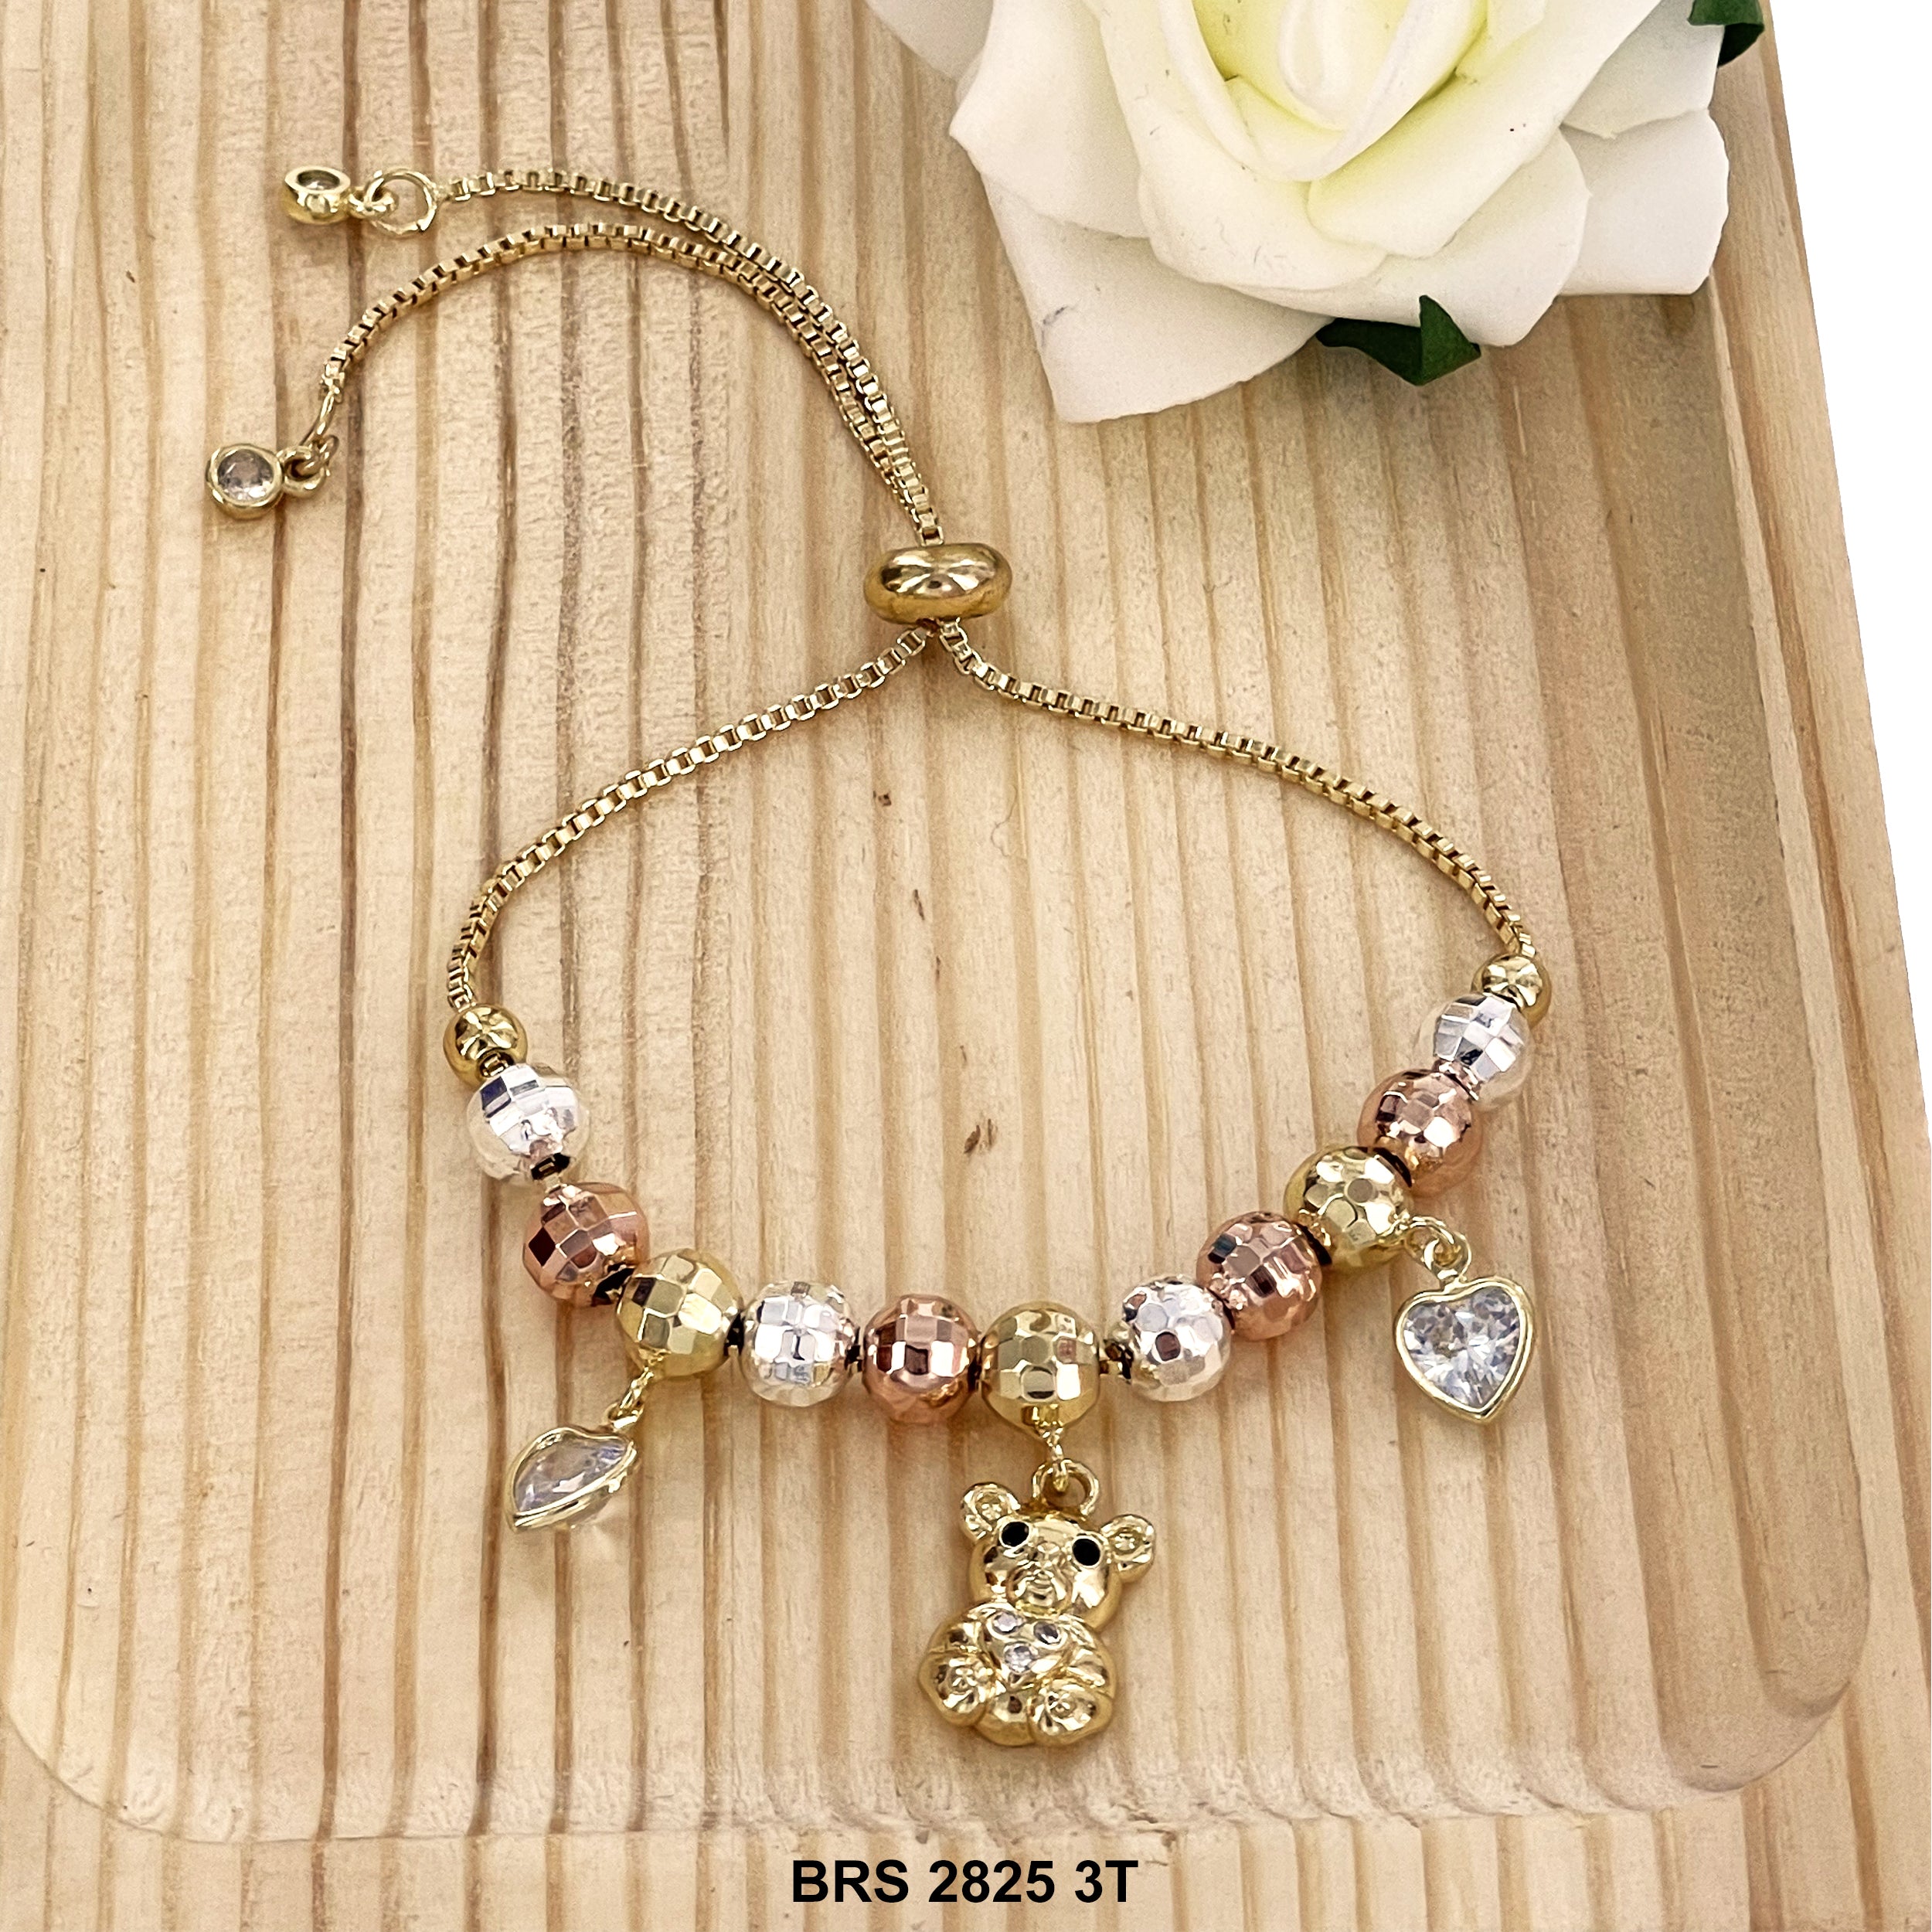 Bear Heart Stone Charms Disco Ball Beads Adjustable Bracelet BRS 2825 3T